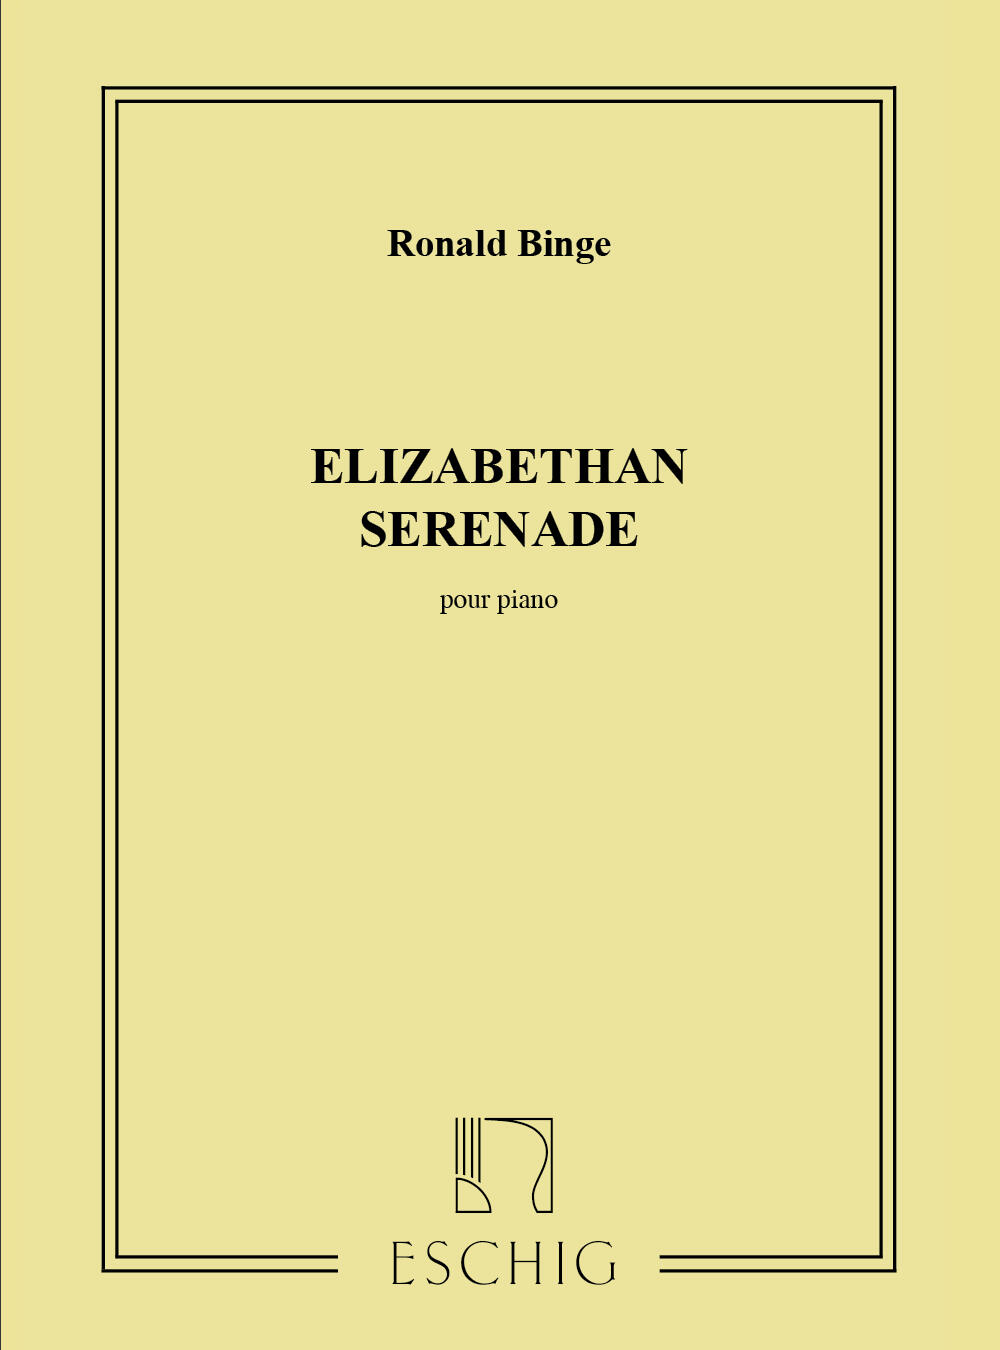 Max Eschig Elizabeth Serenade  Pour Piano Roland Binge  Klavier Partitur  ME 7054 : photo 1